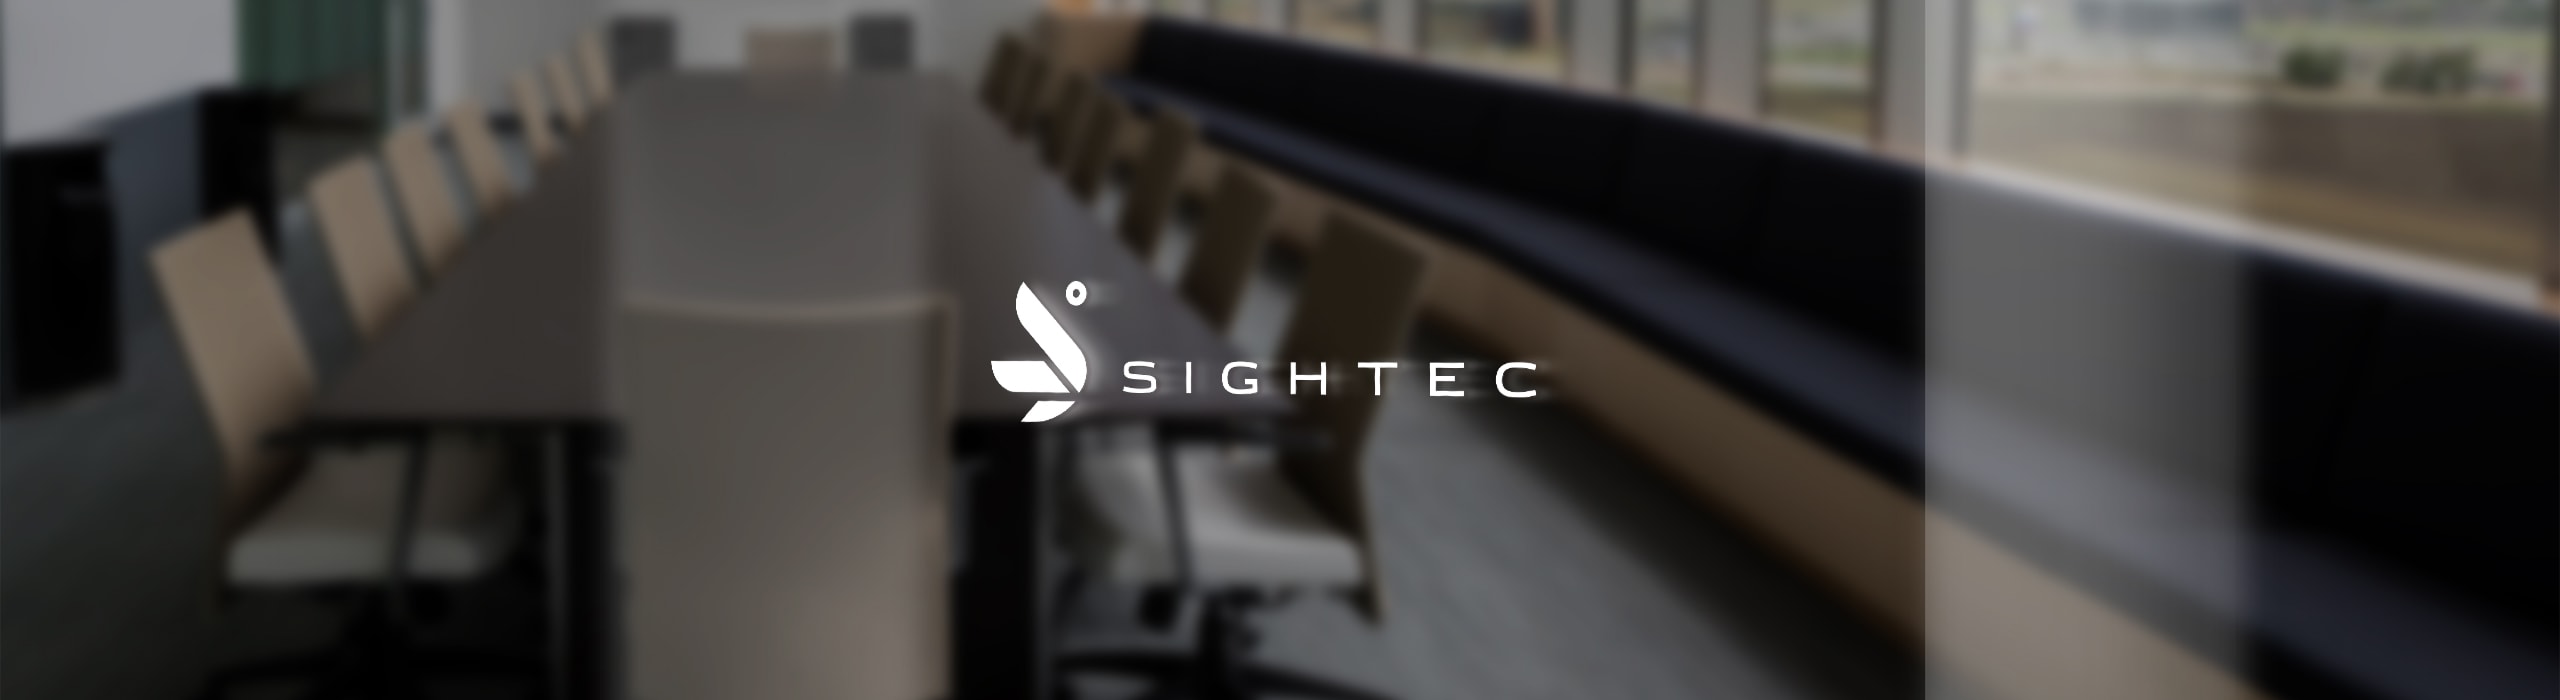 Sightec - logo on glass - Natie Branding Agency